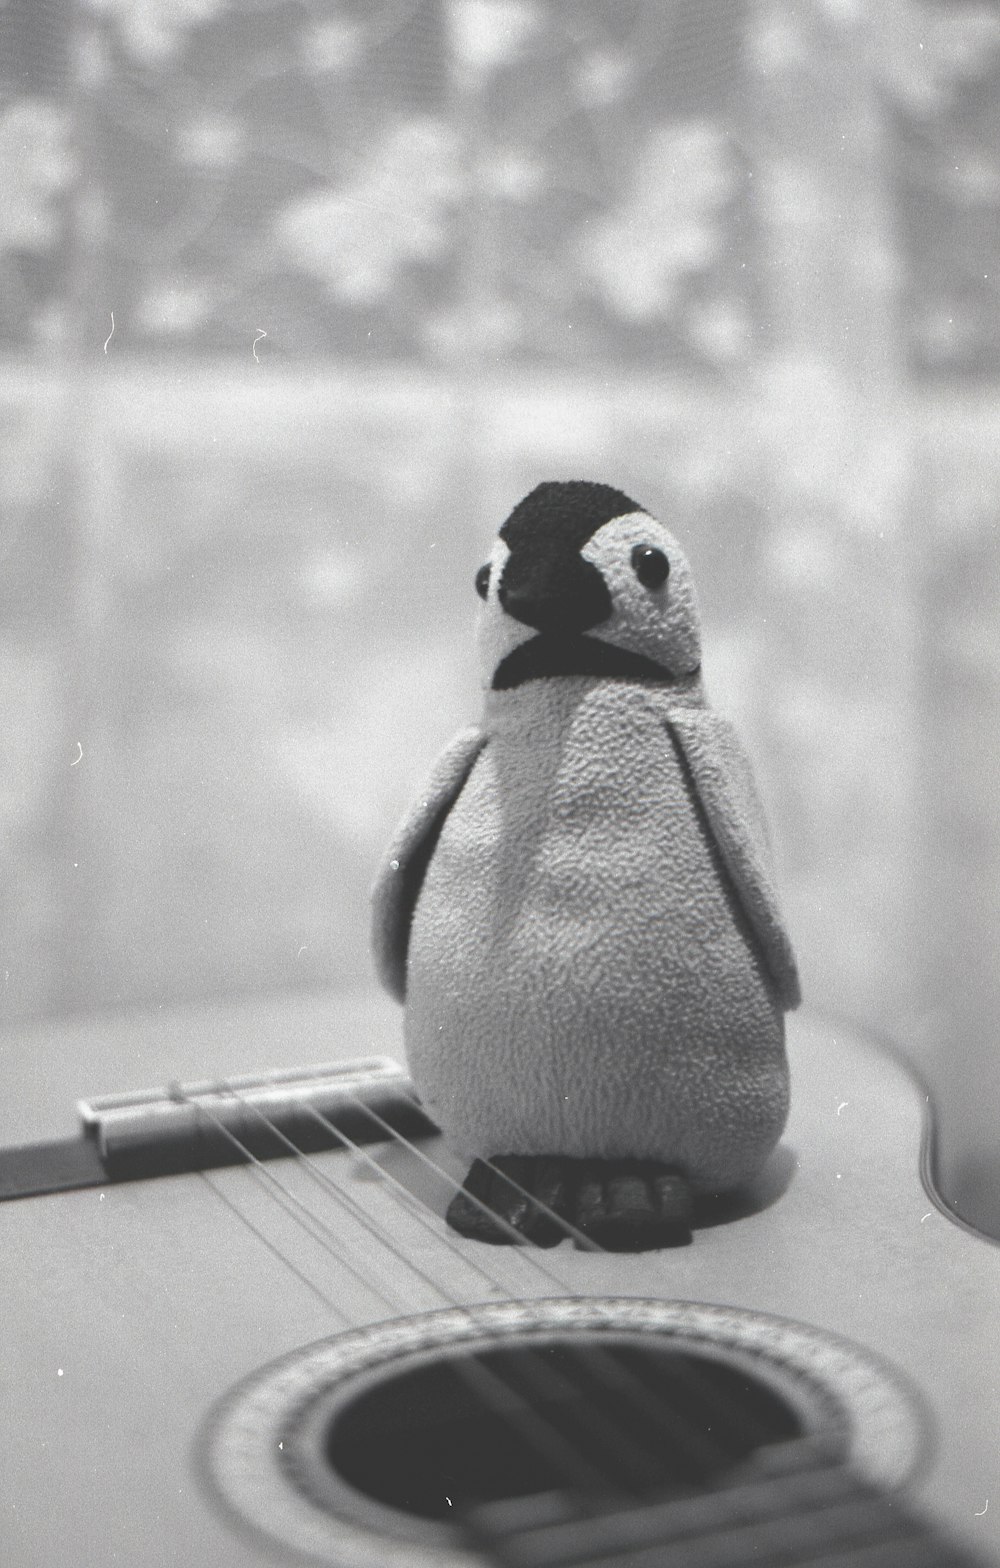 penguin figurine on black piano